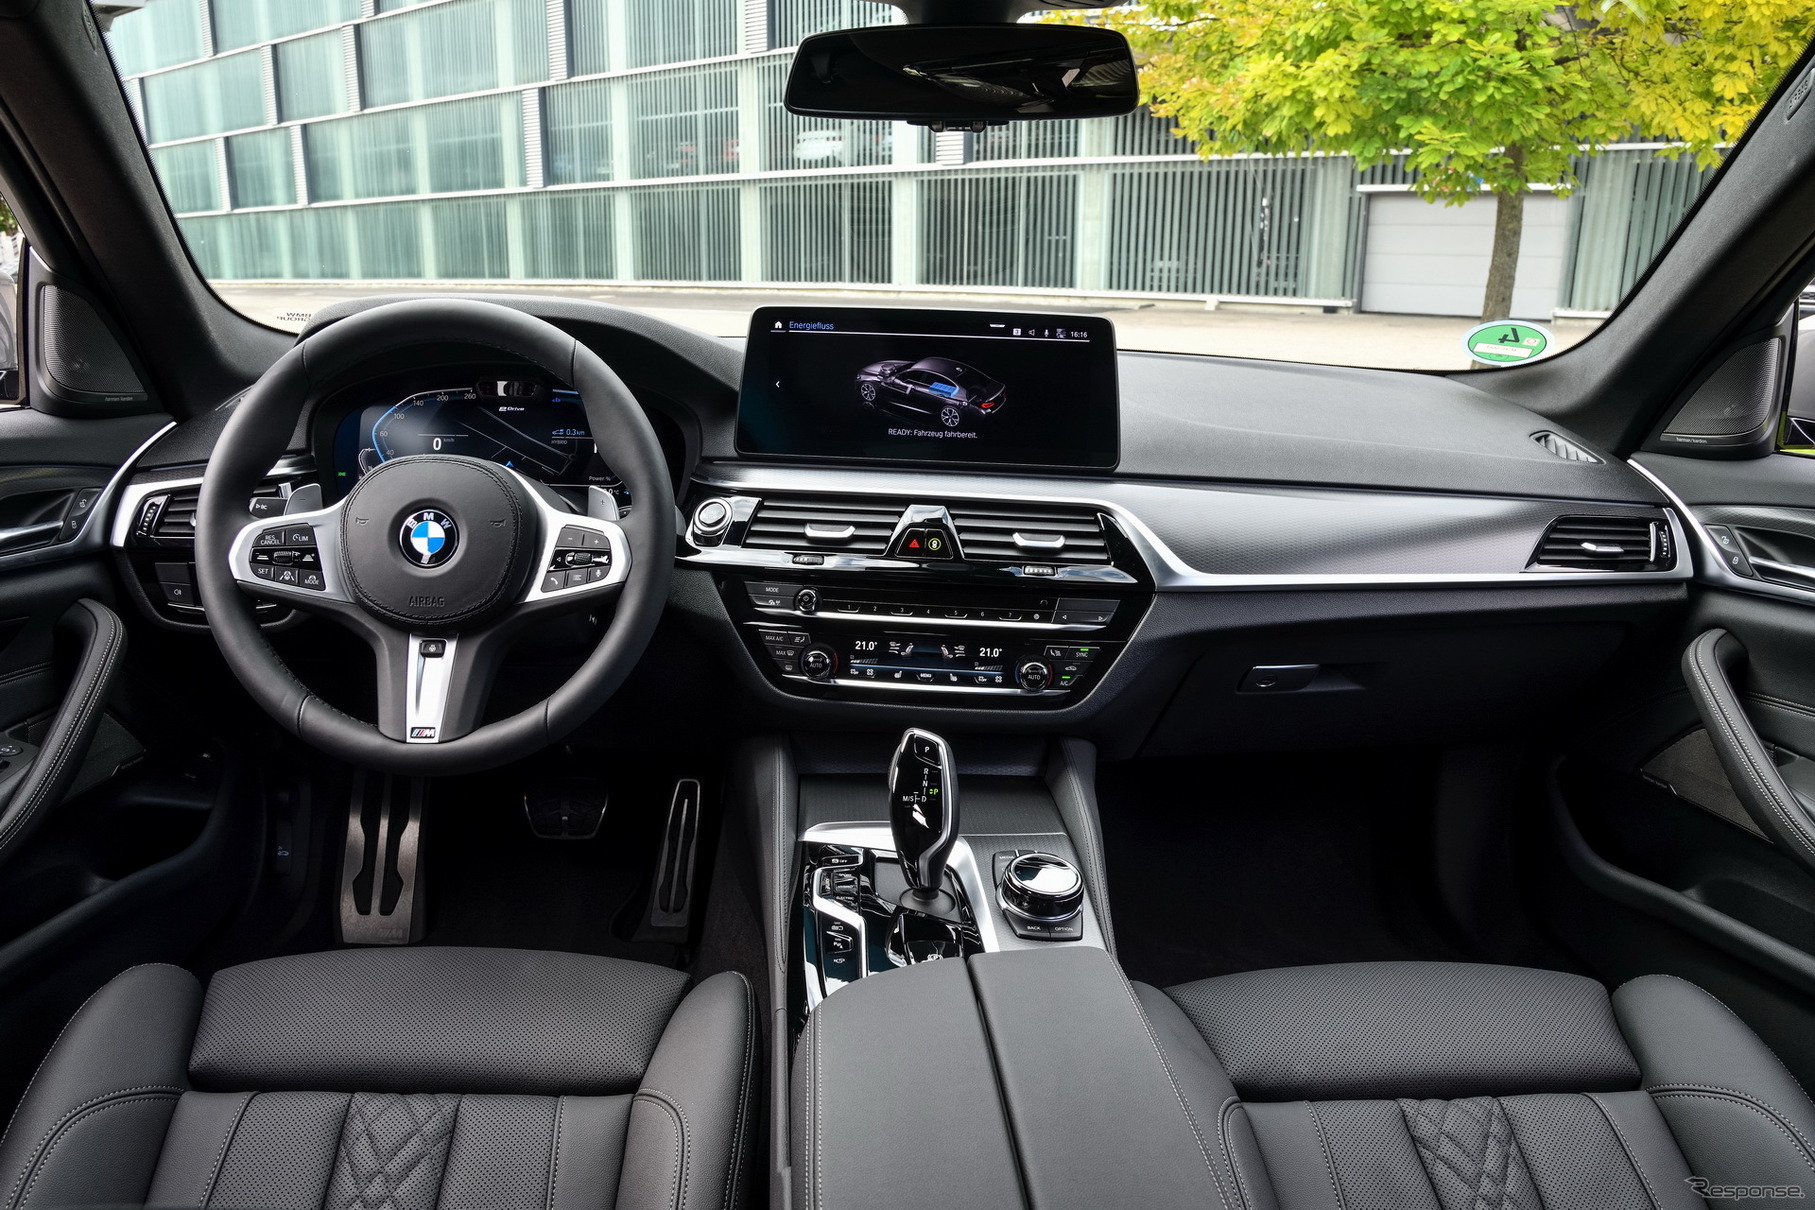 BMW 5シリーズ・セダン 改良新型のPHV「545e xDrive」